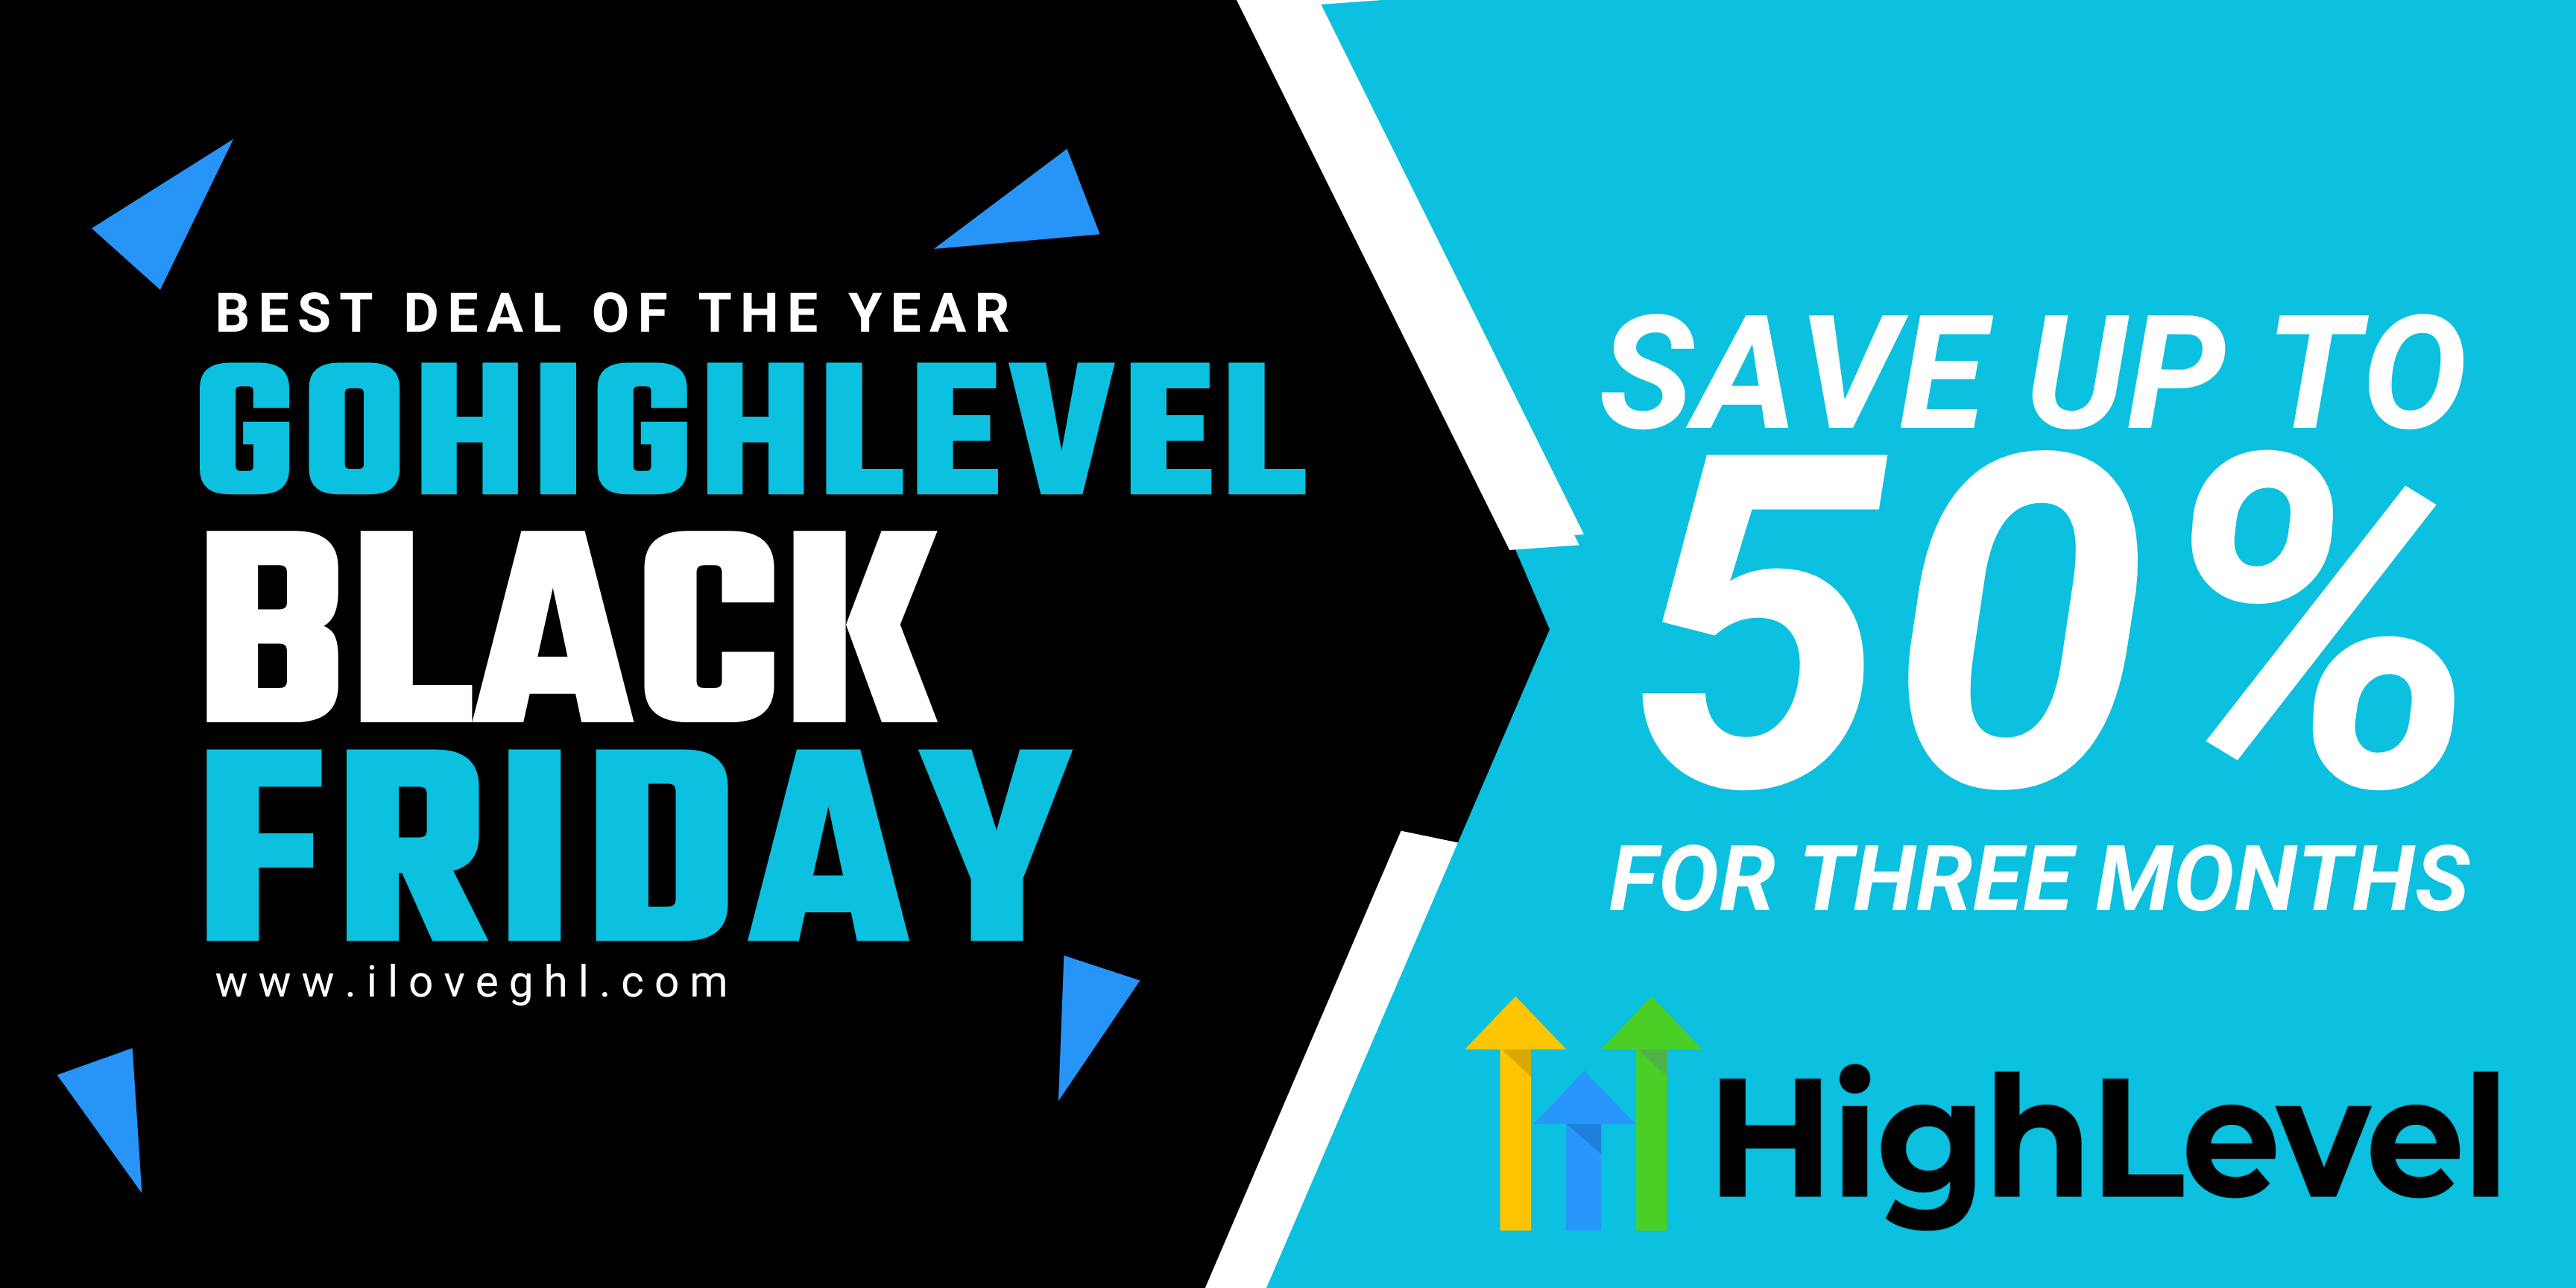 GoHighLevel Black Friday Deal 2023